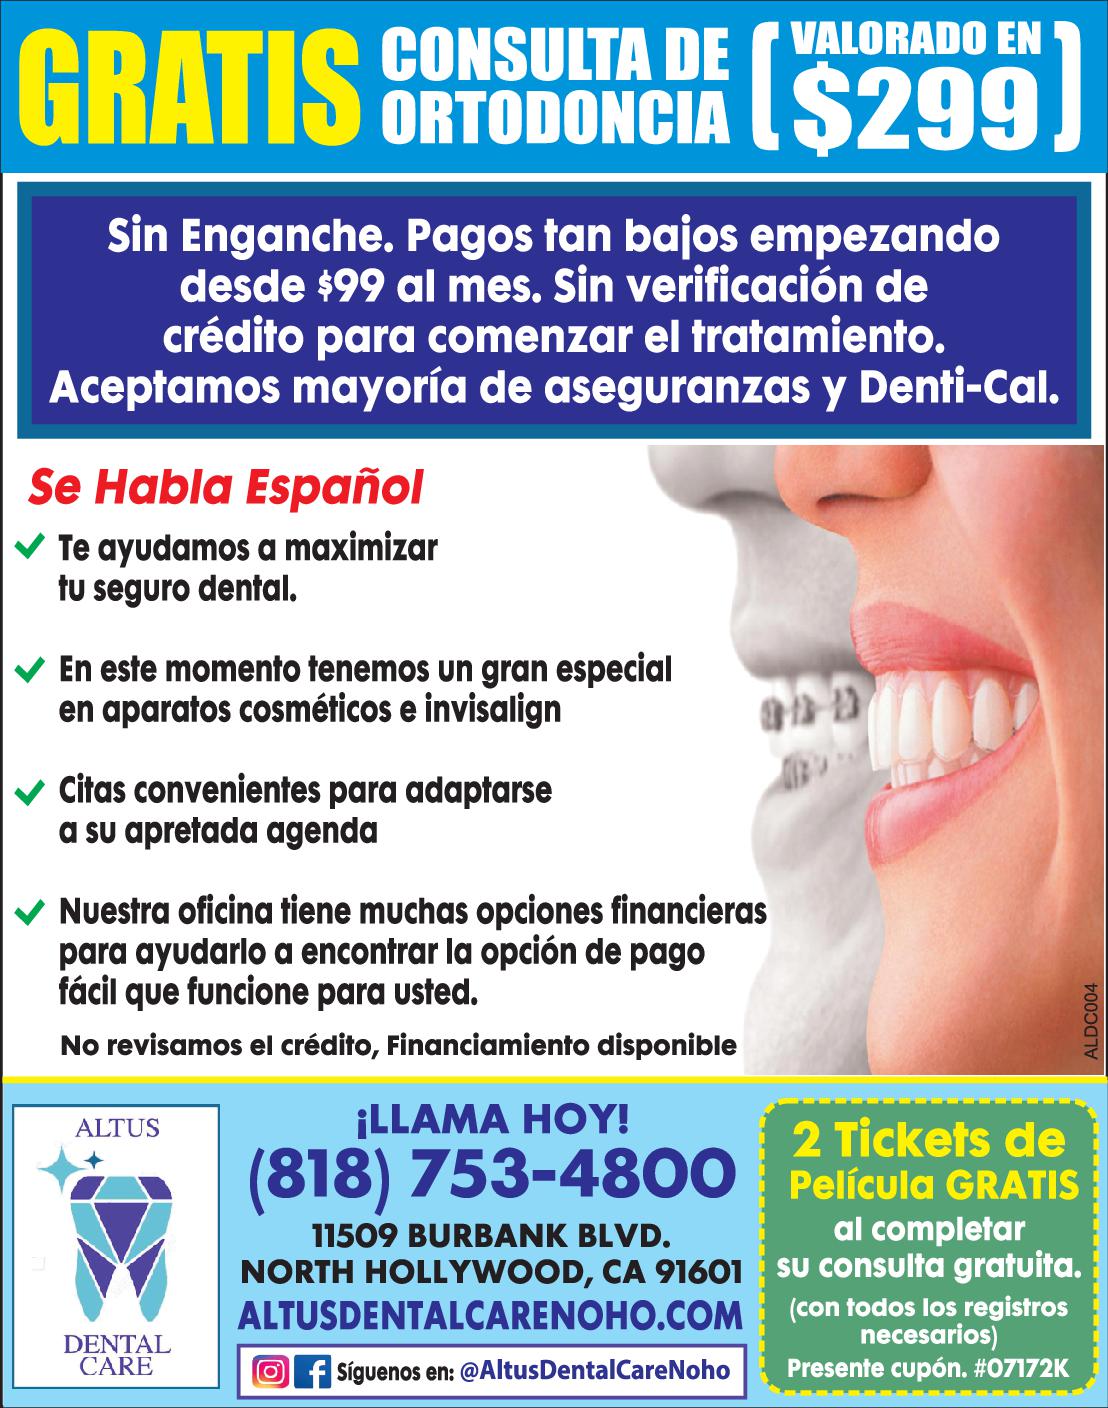 Altus Dental Care